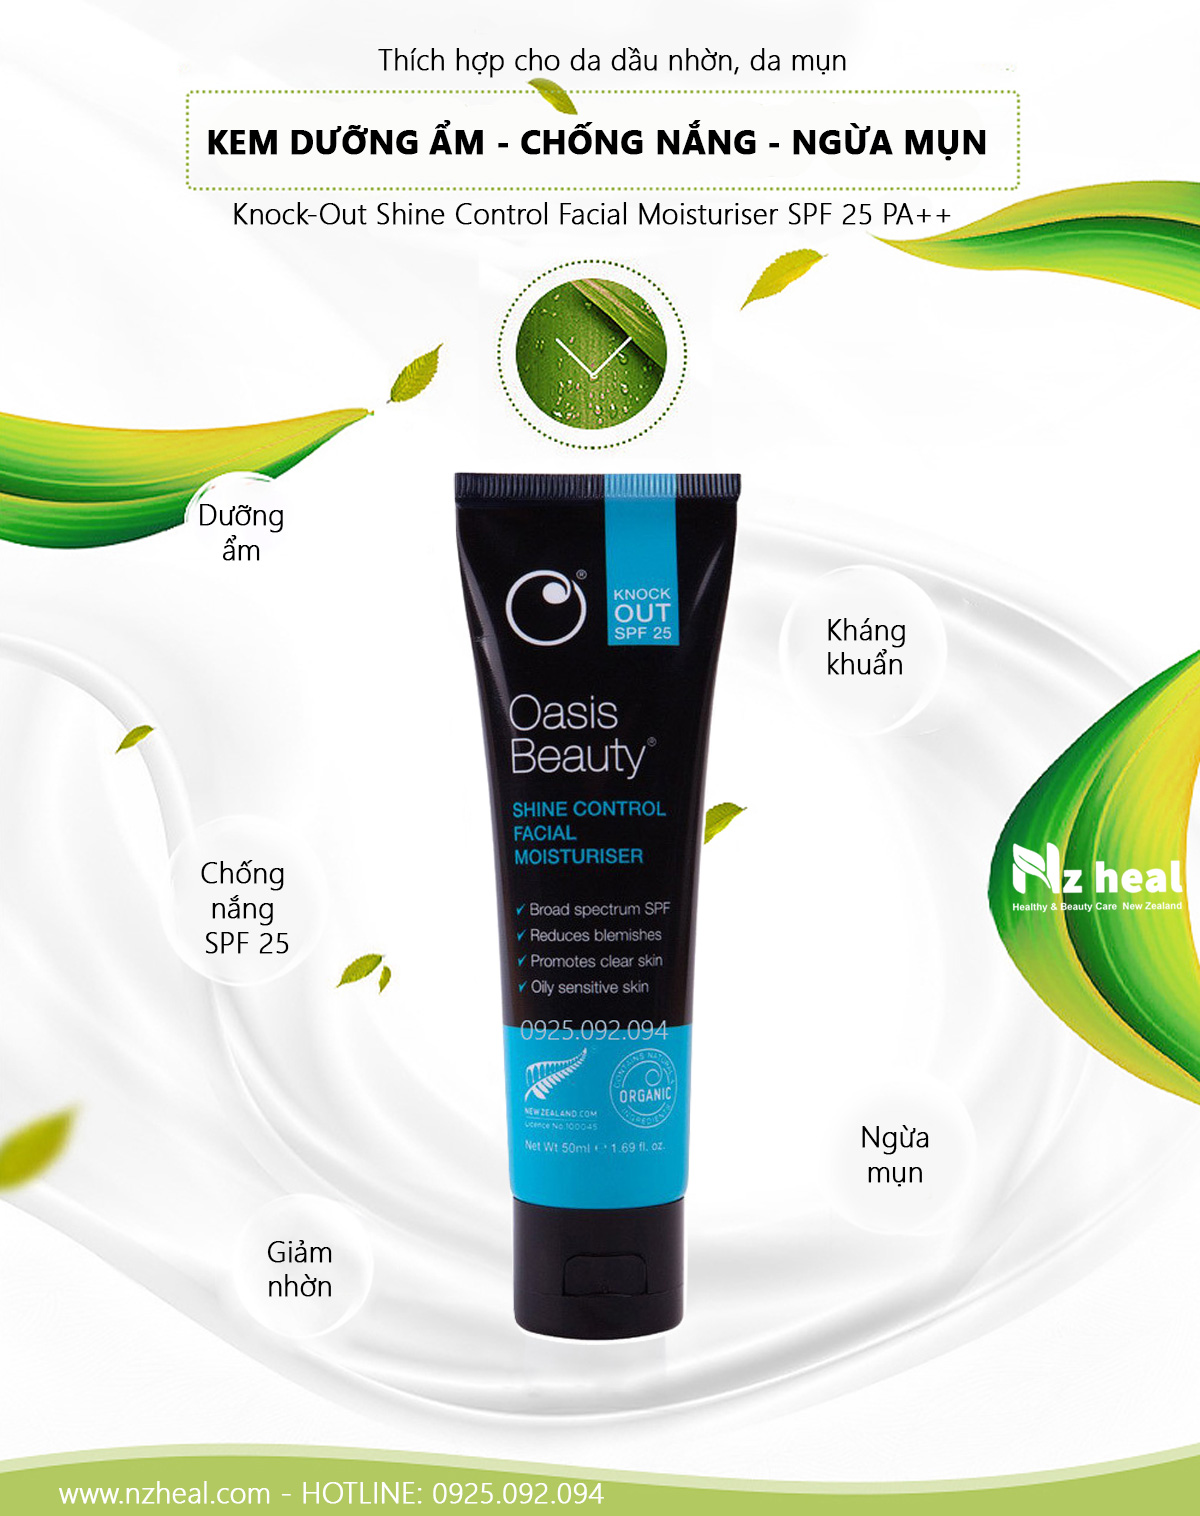 Kem dưỡng ẩm, chống nắng Oasis Beauty Knock-Out Shine Control Facial Moisturiser SPF 25 PA++